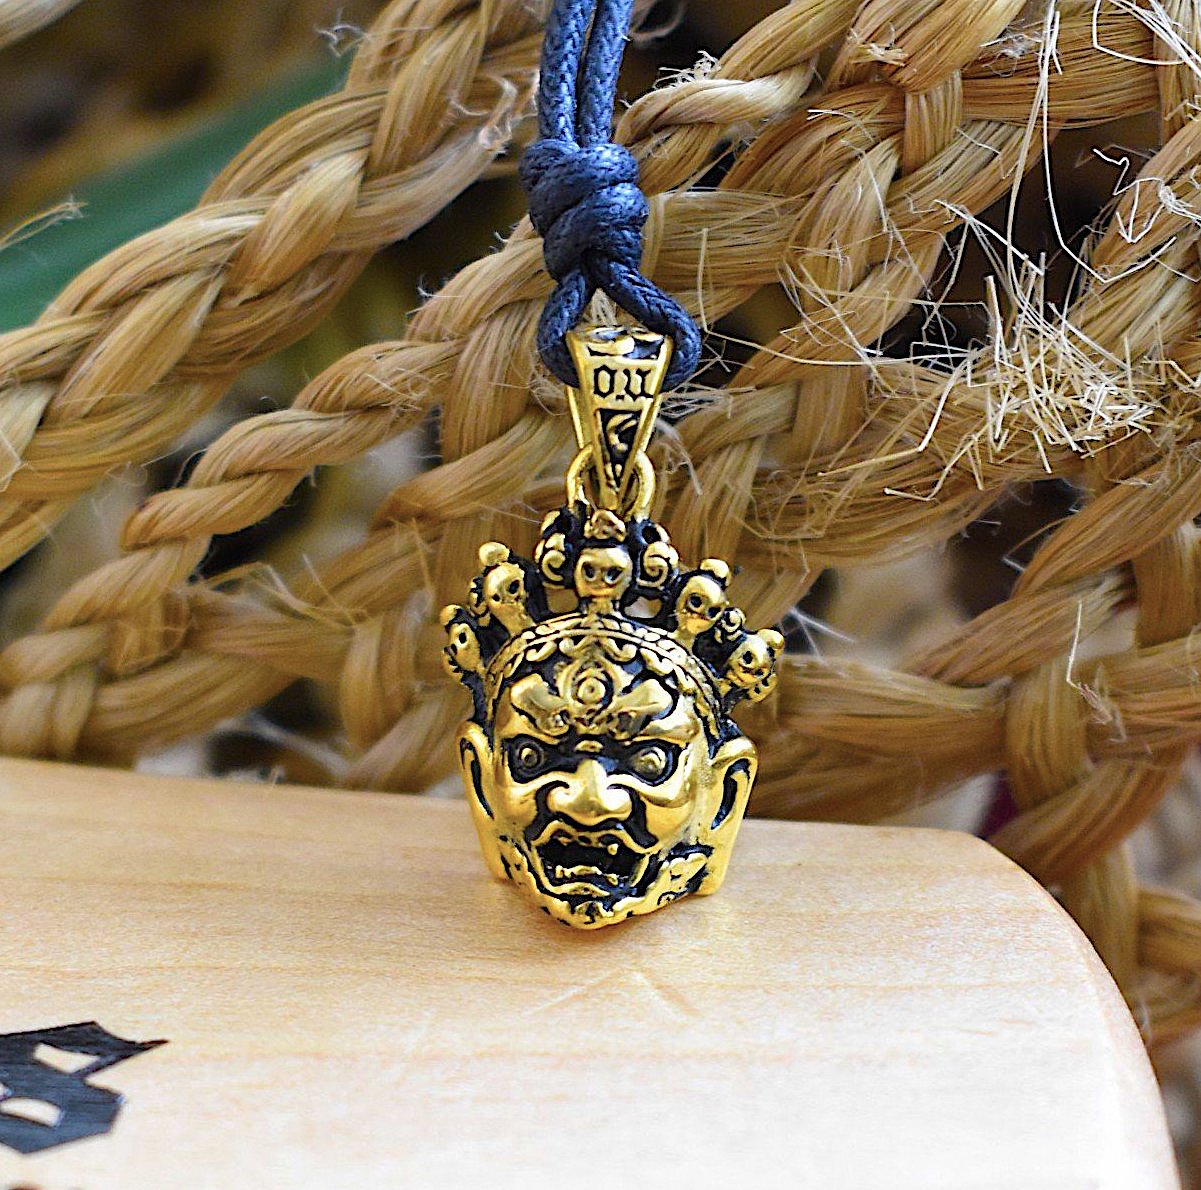 New Japanese Hannya Mask Handmade Brass Charm Necklace Pendant Jewelry